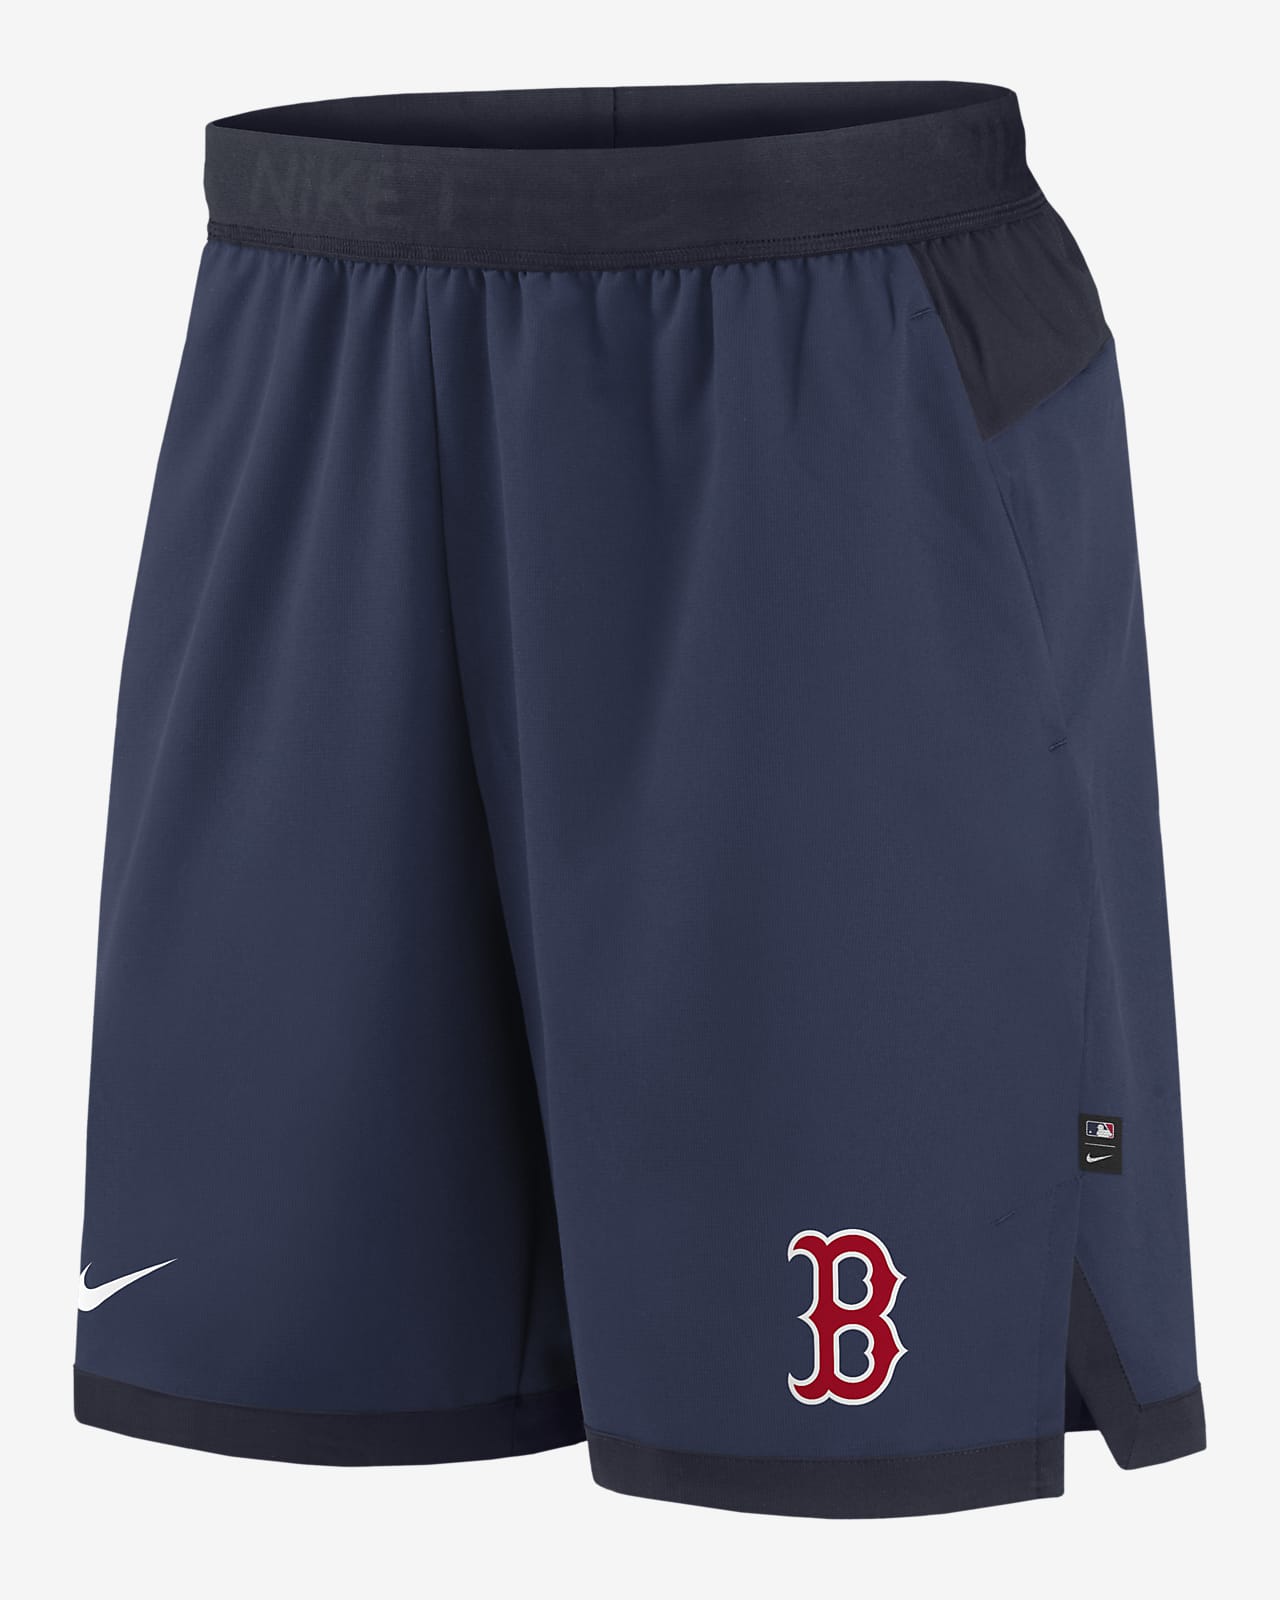 Nike Dri-FIT City Connect (MLB Boston Red Sox) Men's Shorts.